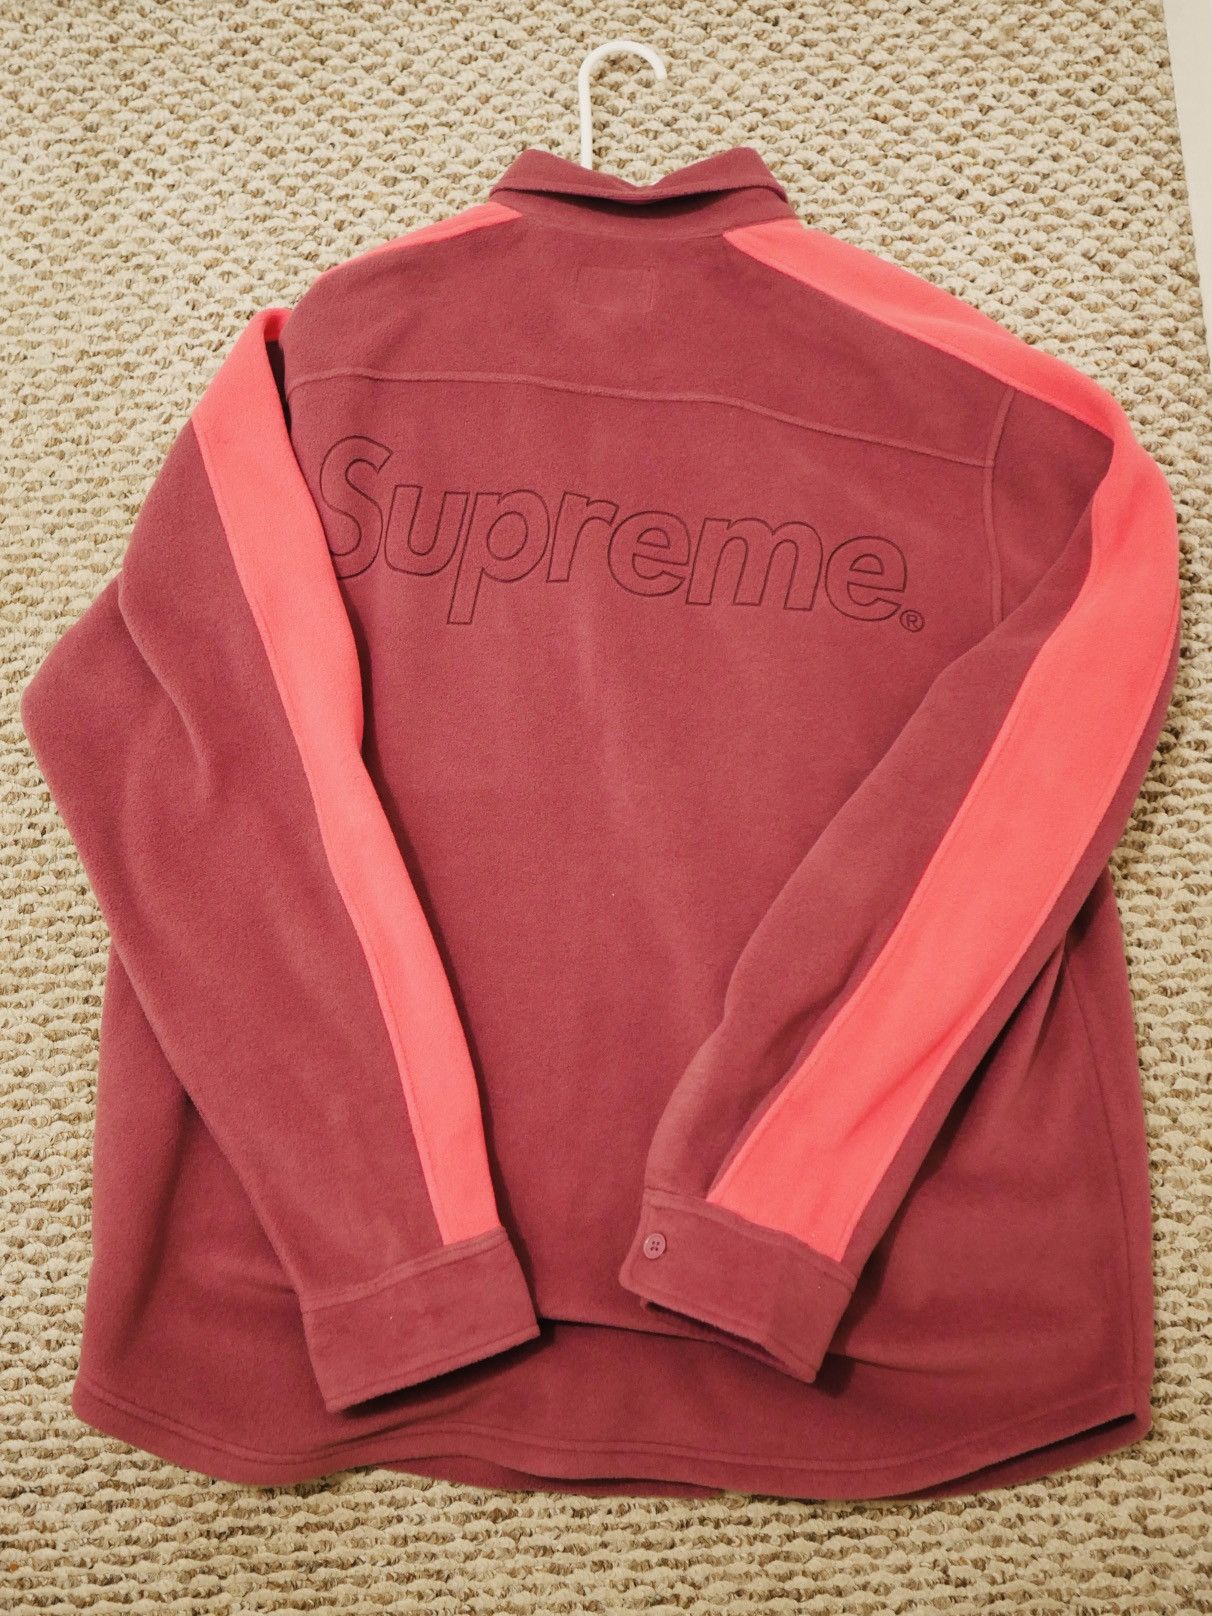 Supreme Supreme Polartec Shirt. | Grailed